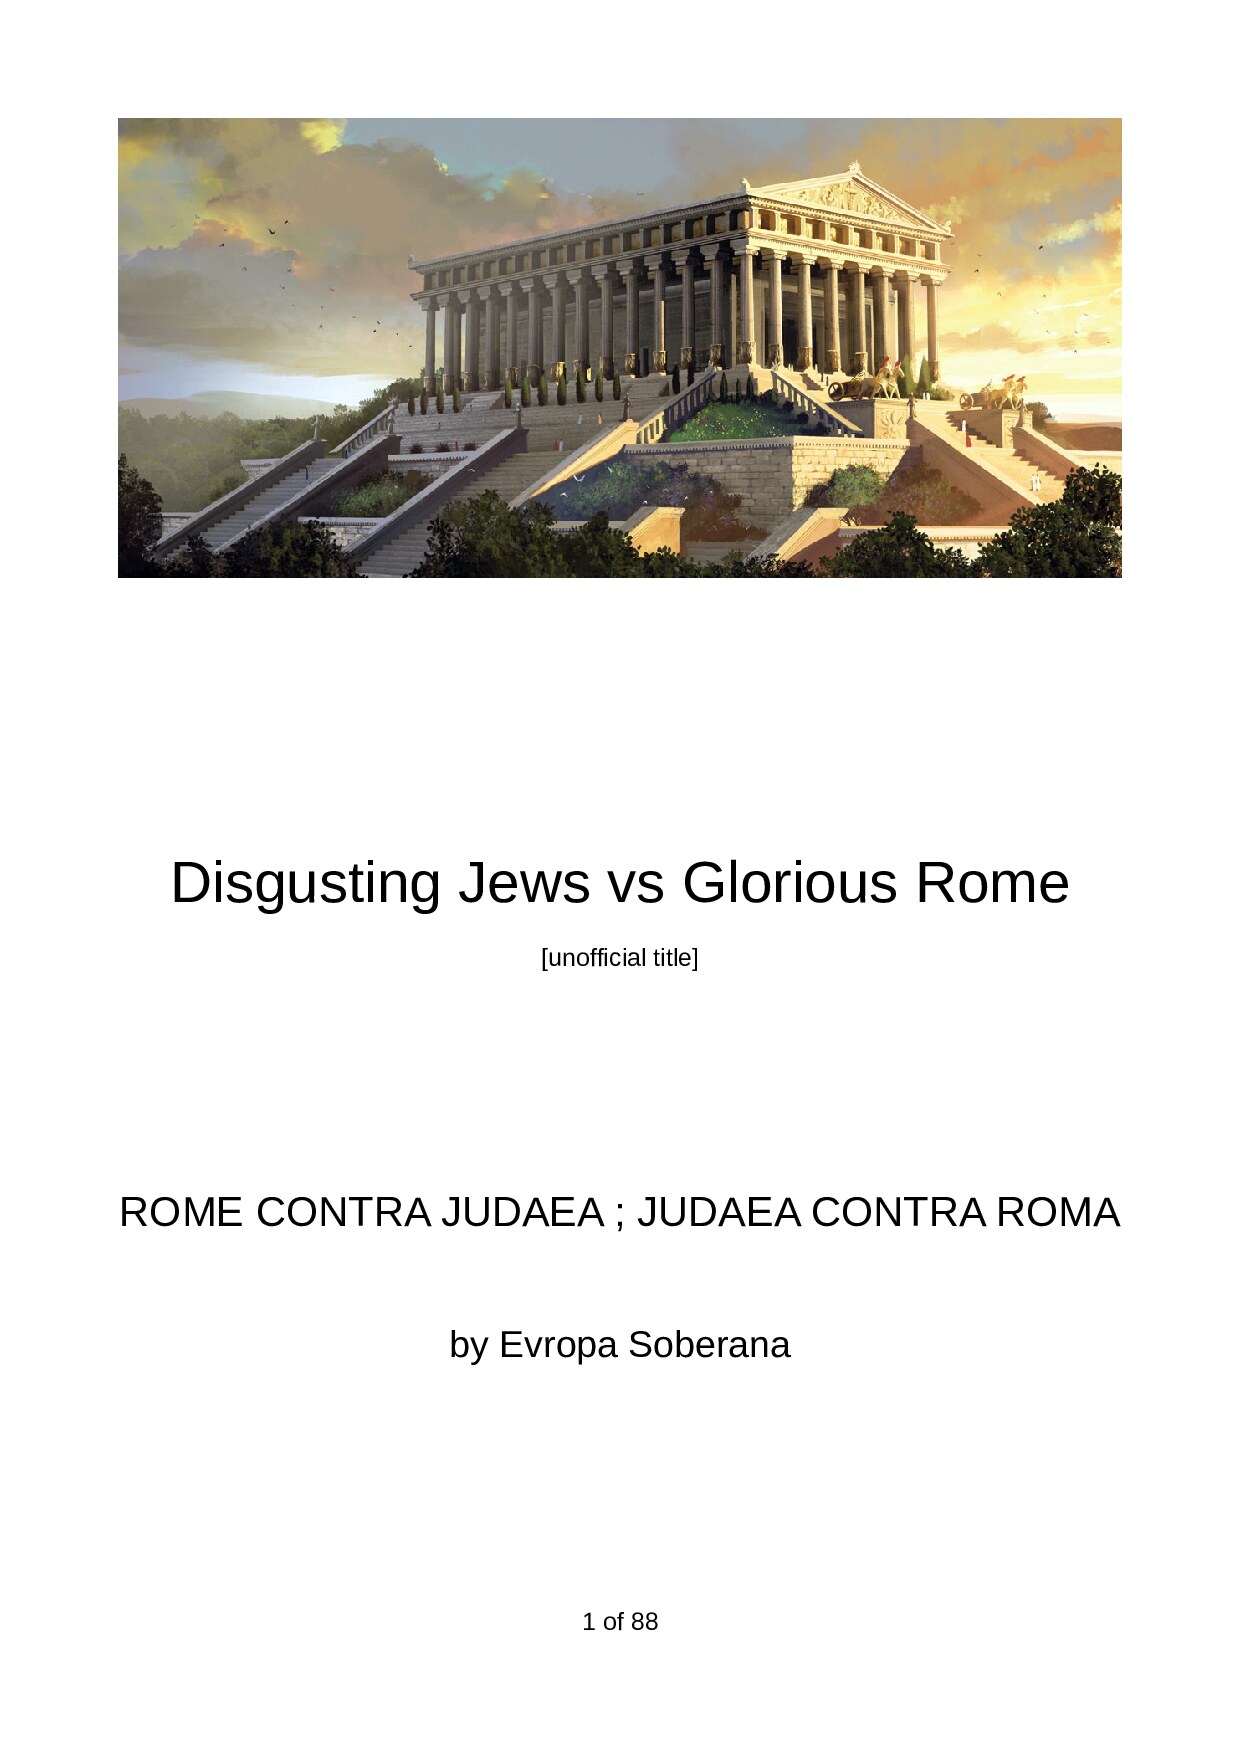 Europa Soberana; Rome Contra Judaea ; Judaea Contra Roma